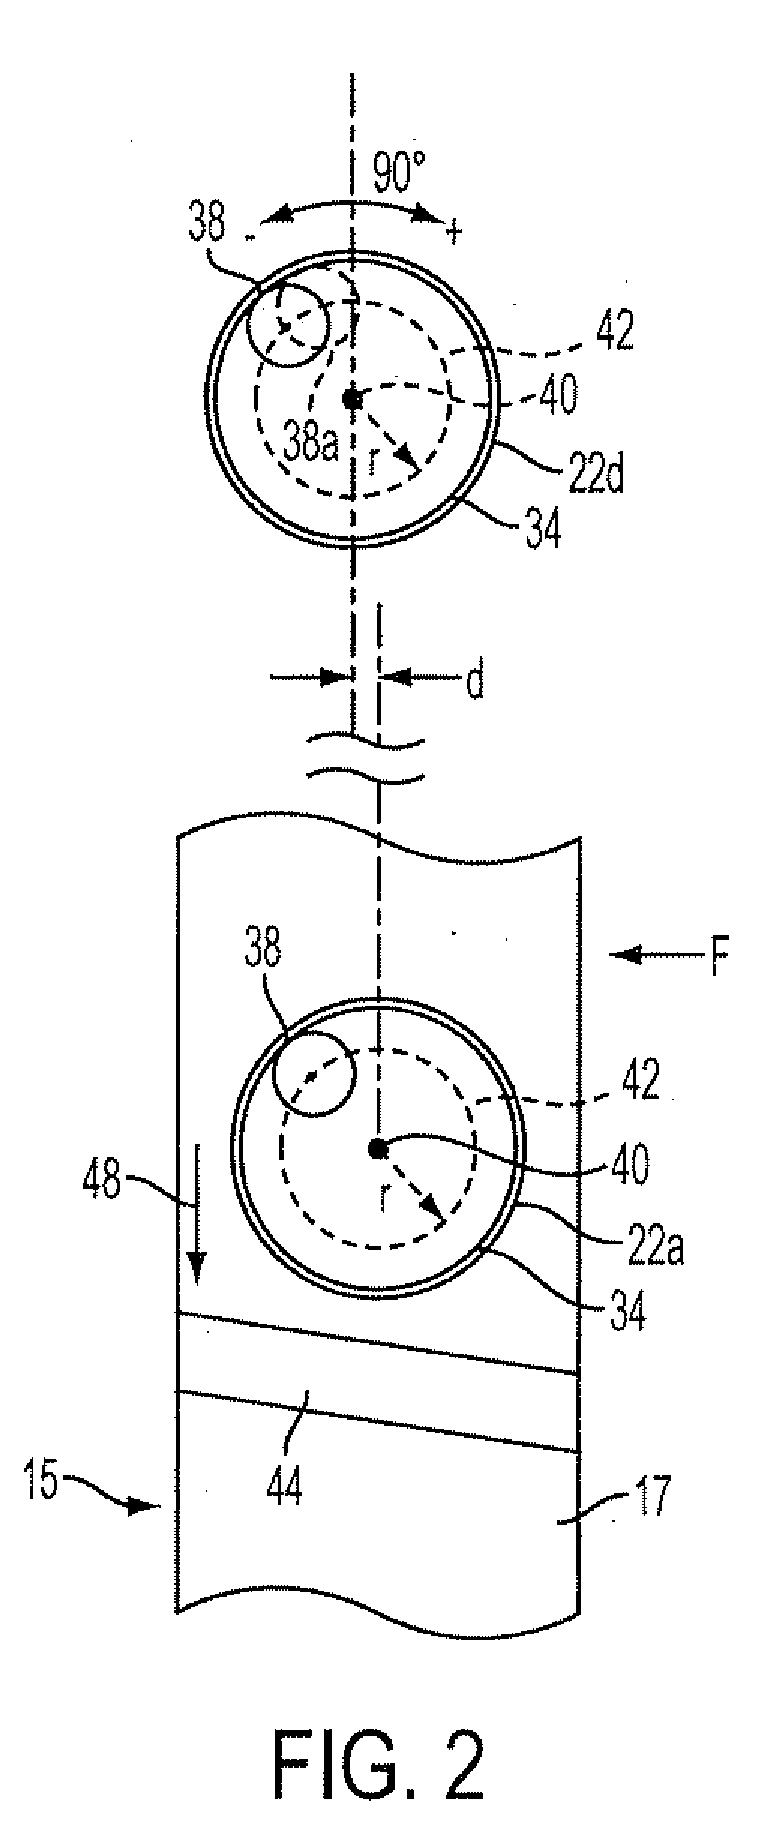 Method of Matching Sensors in a Multi-Probe Turbine Blade Vibration Monitor